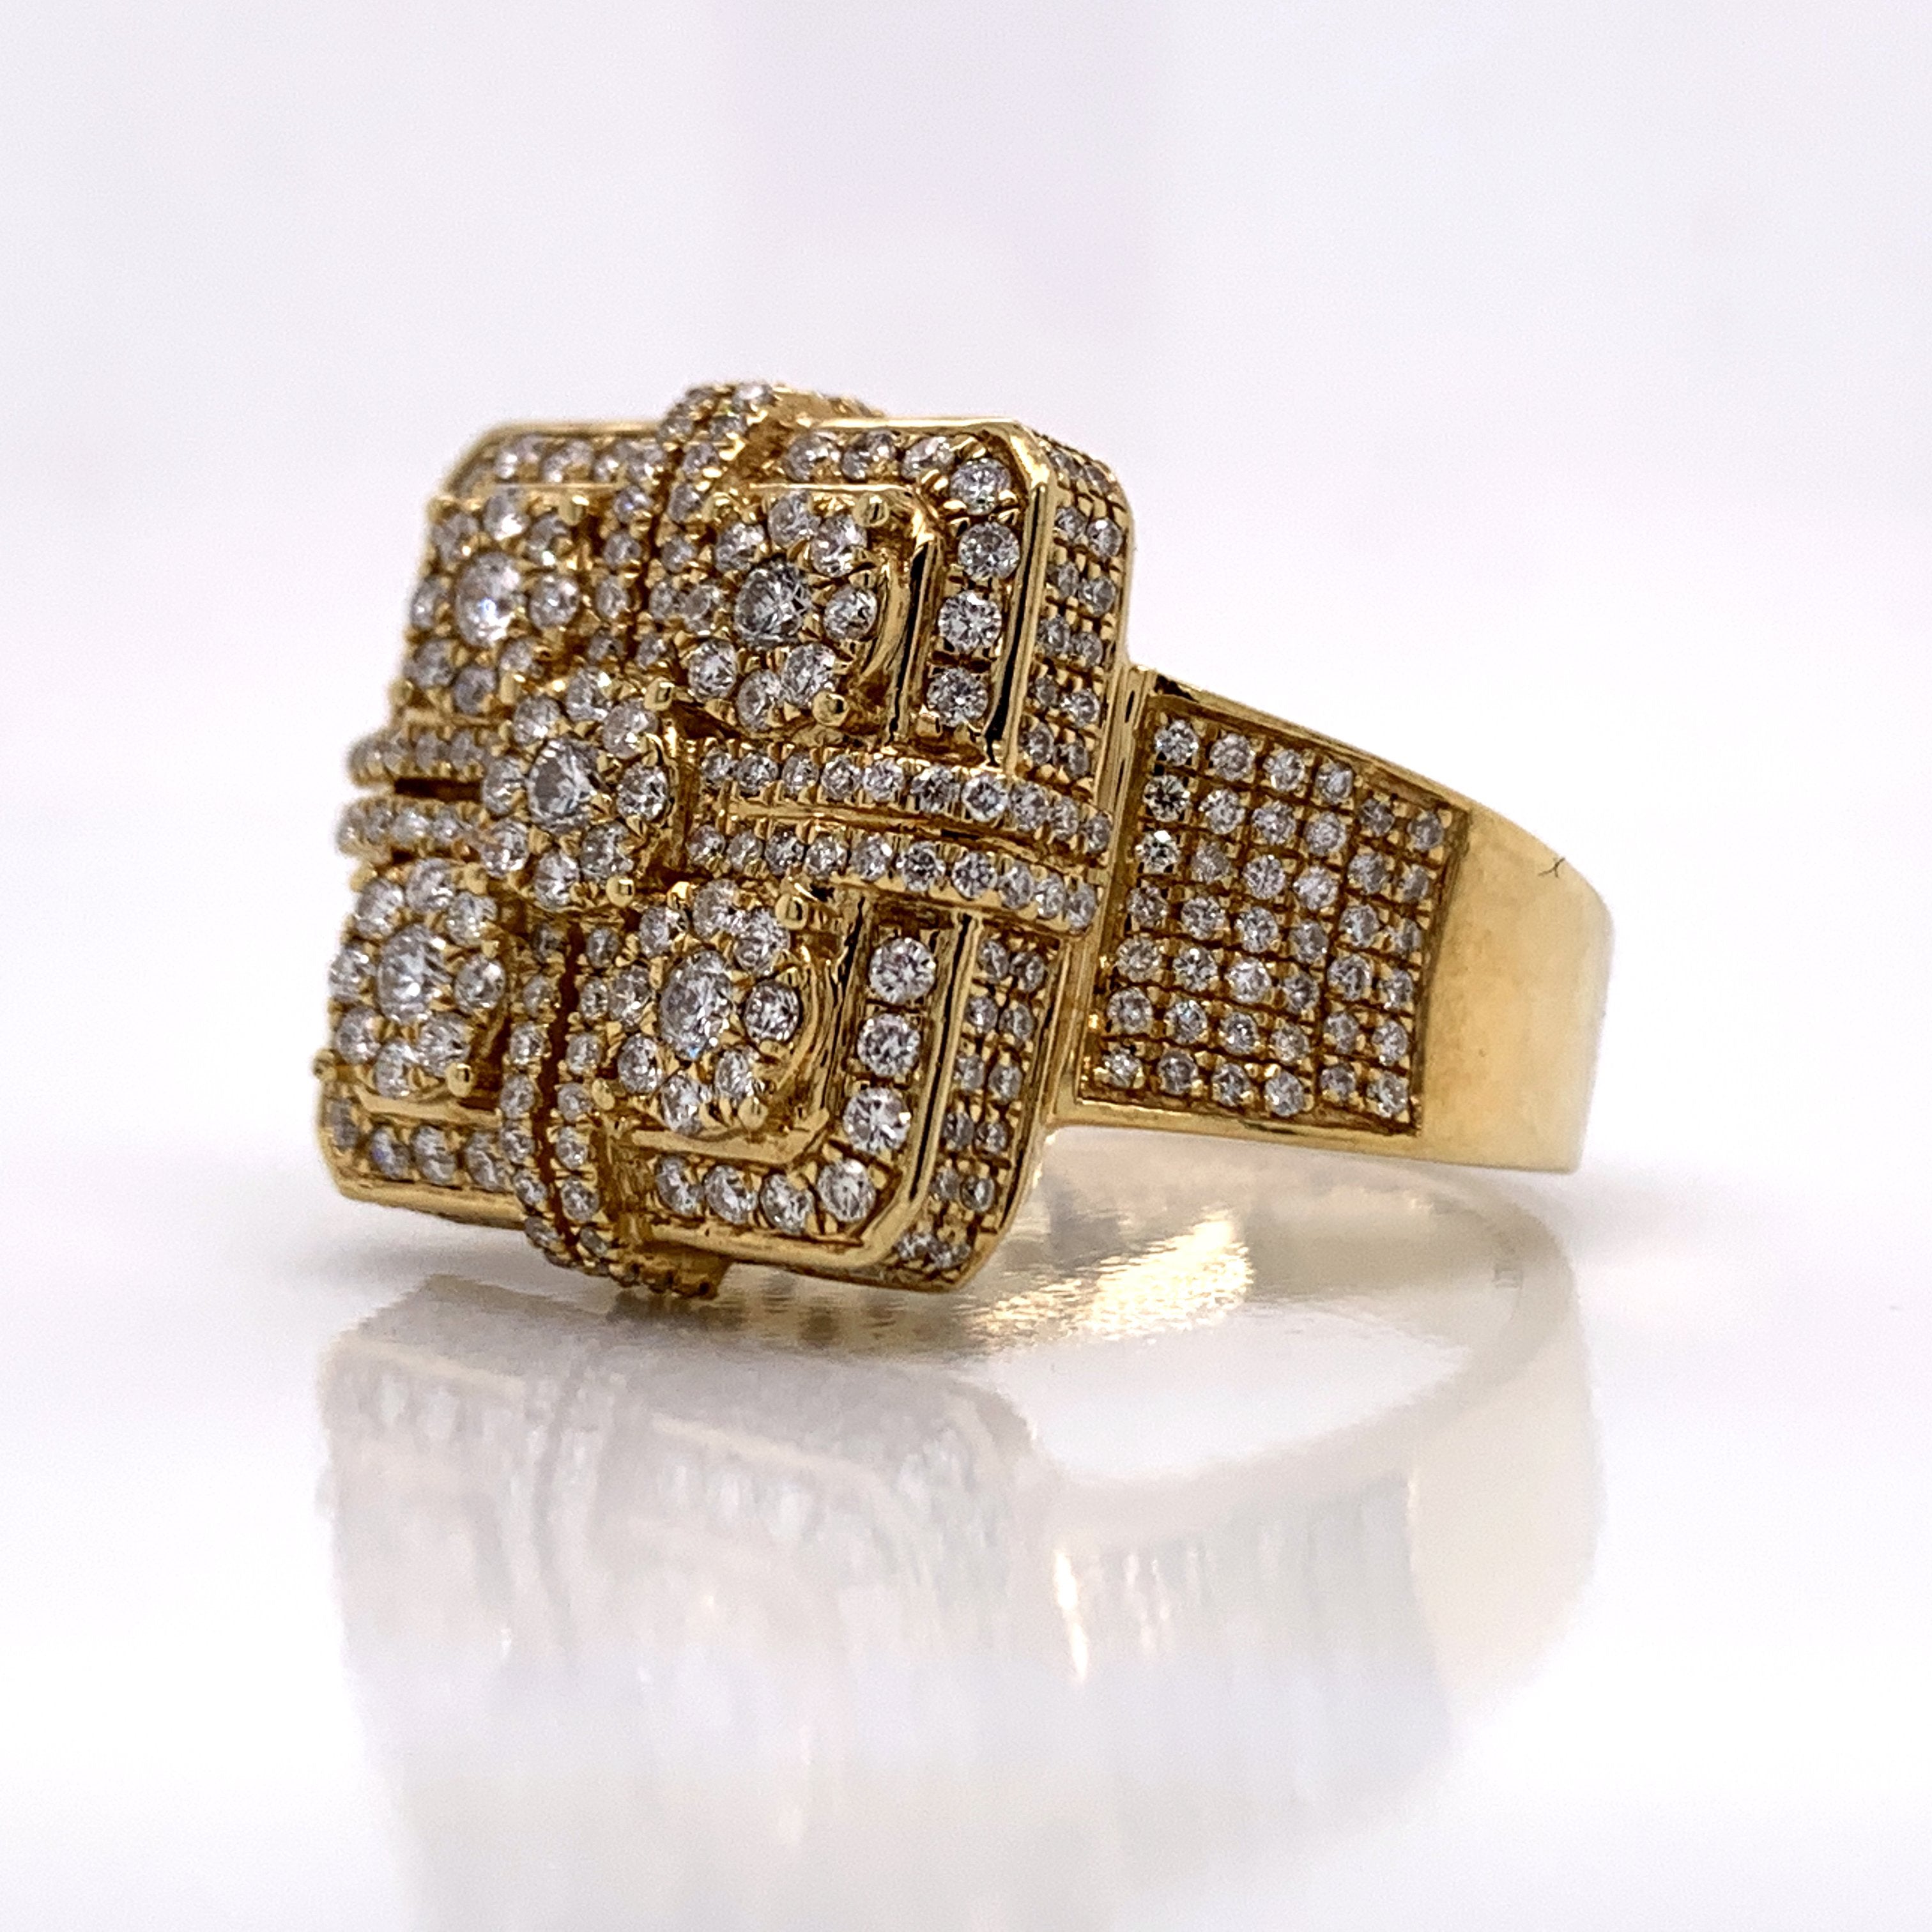 1.98CT Diamond Ring in 10K Gold - White Carat Diamonds 